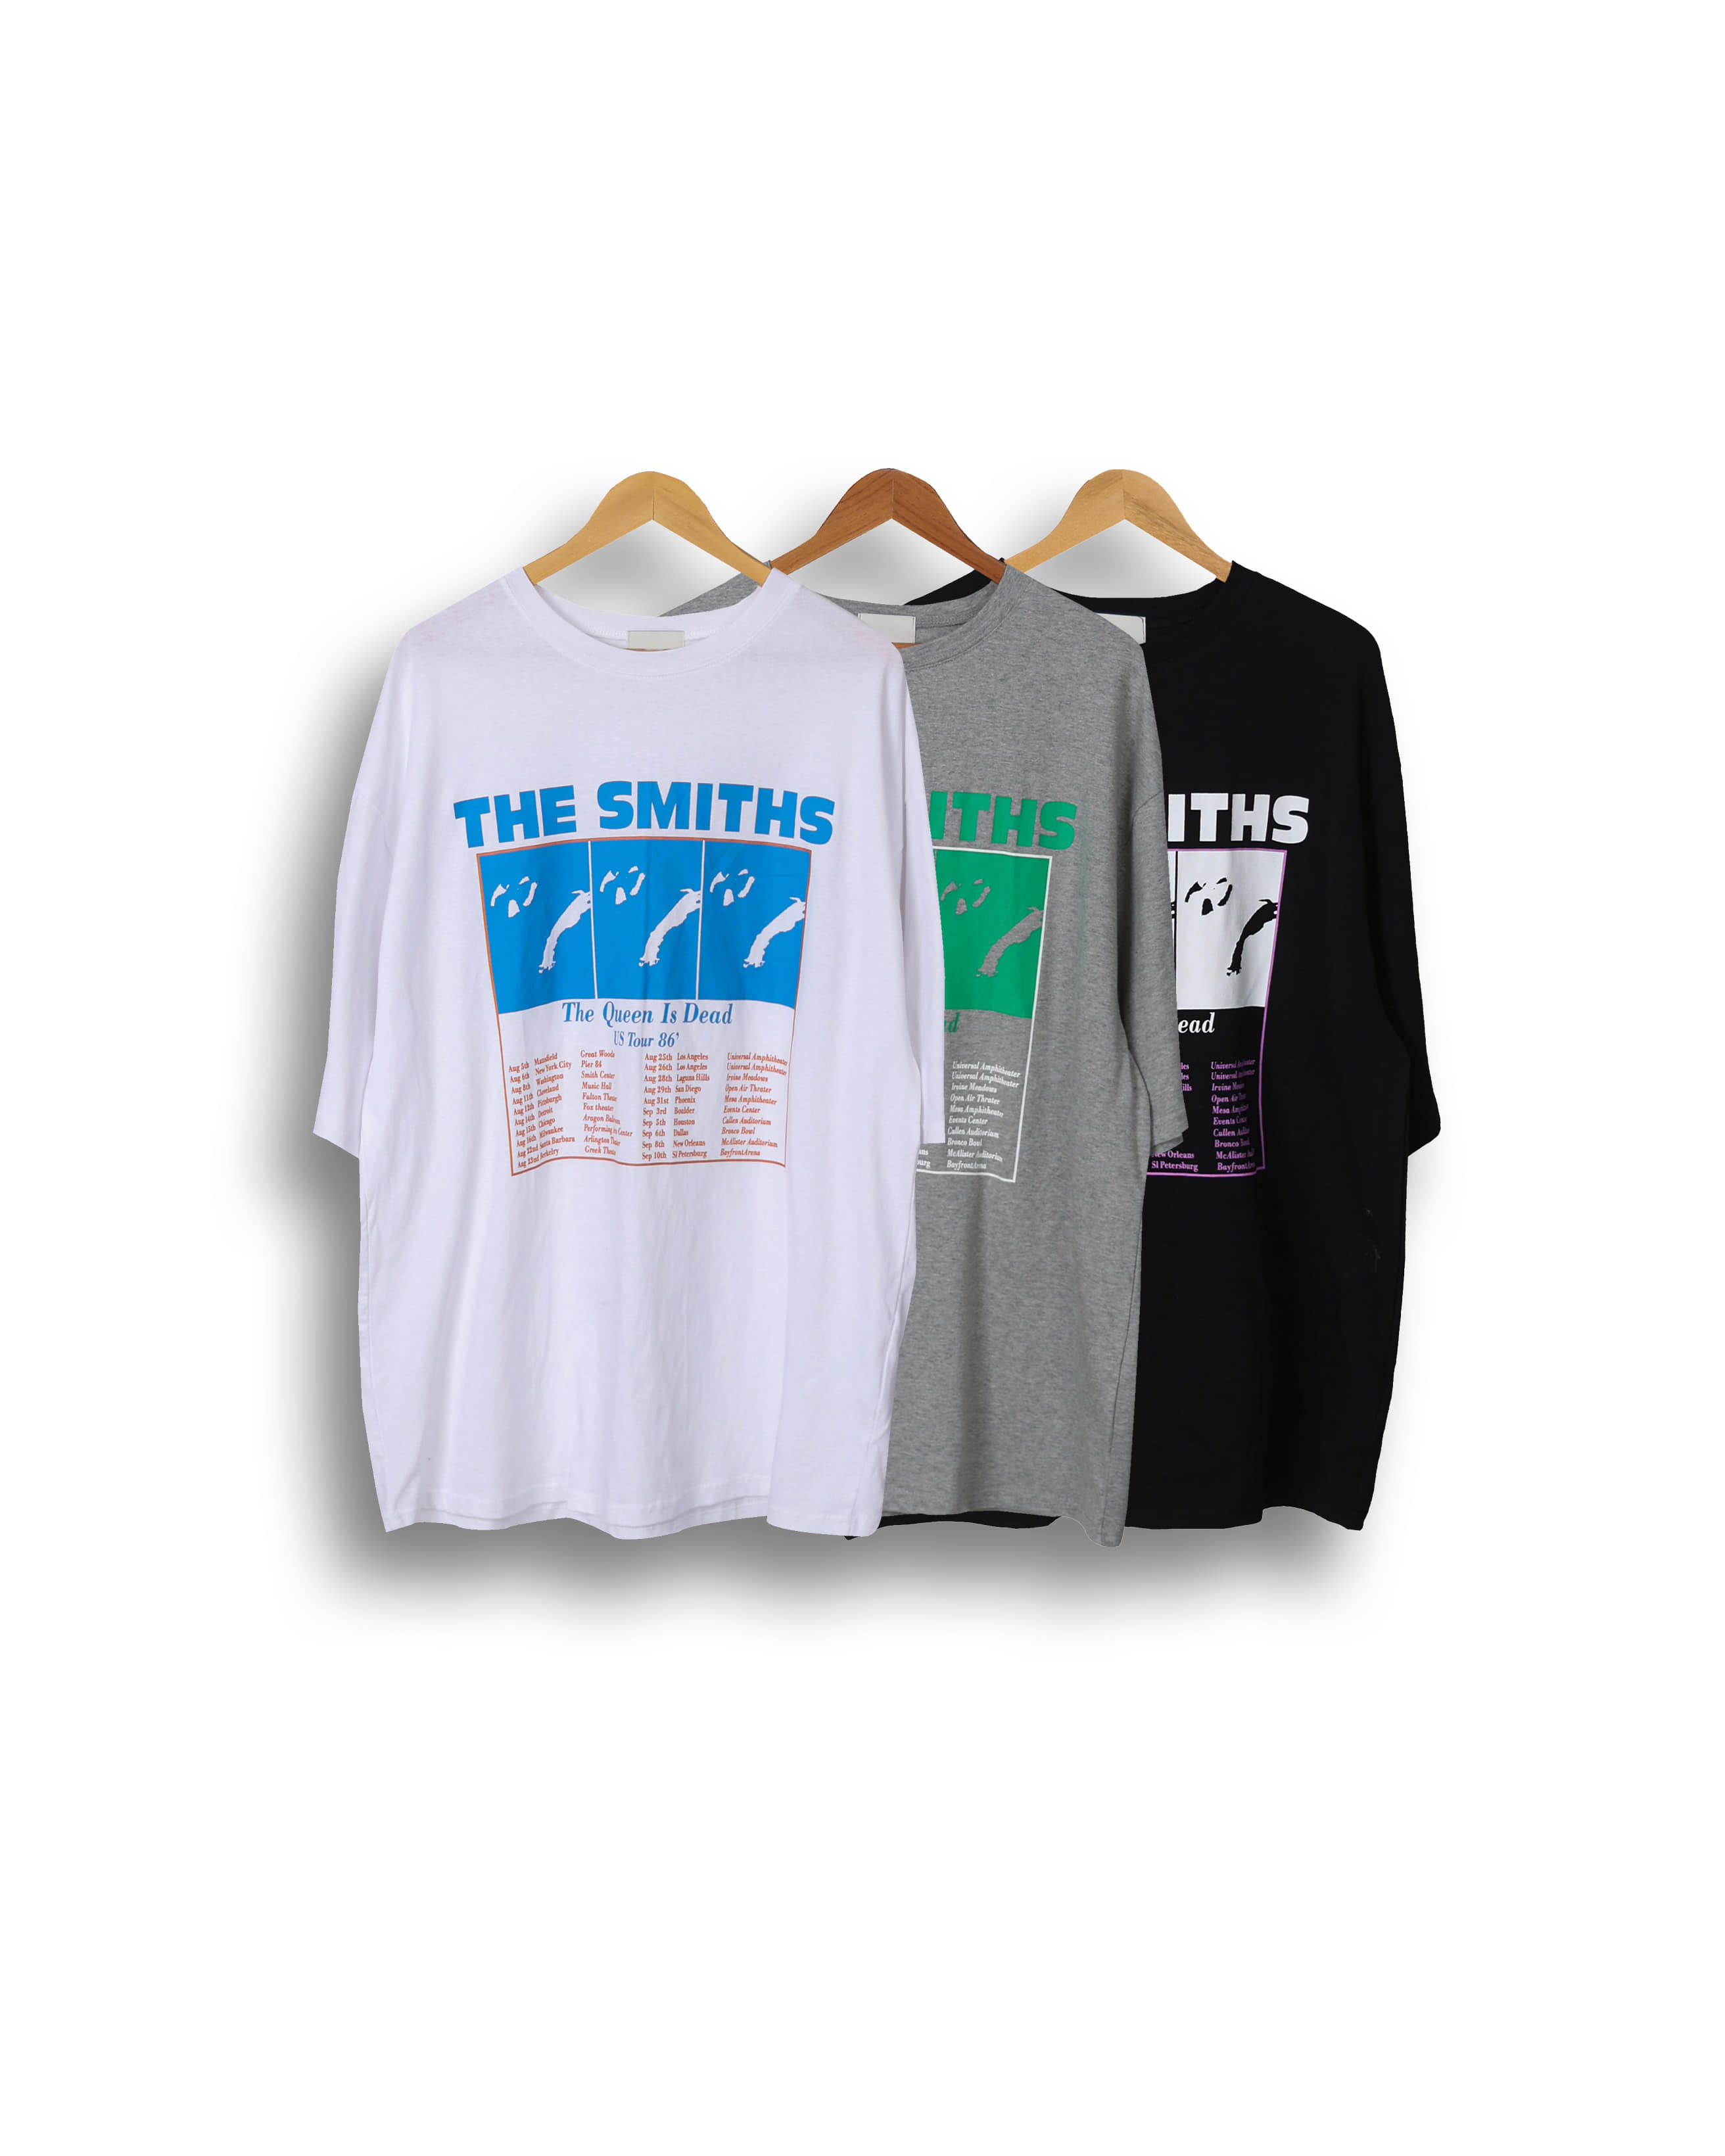 THE SMITHS Box Printed Loose T Shirts (Black/Gray/White)